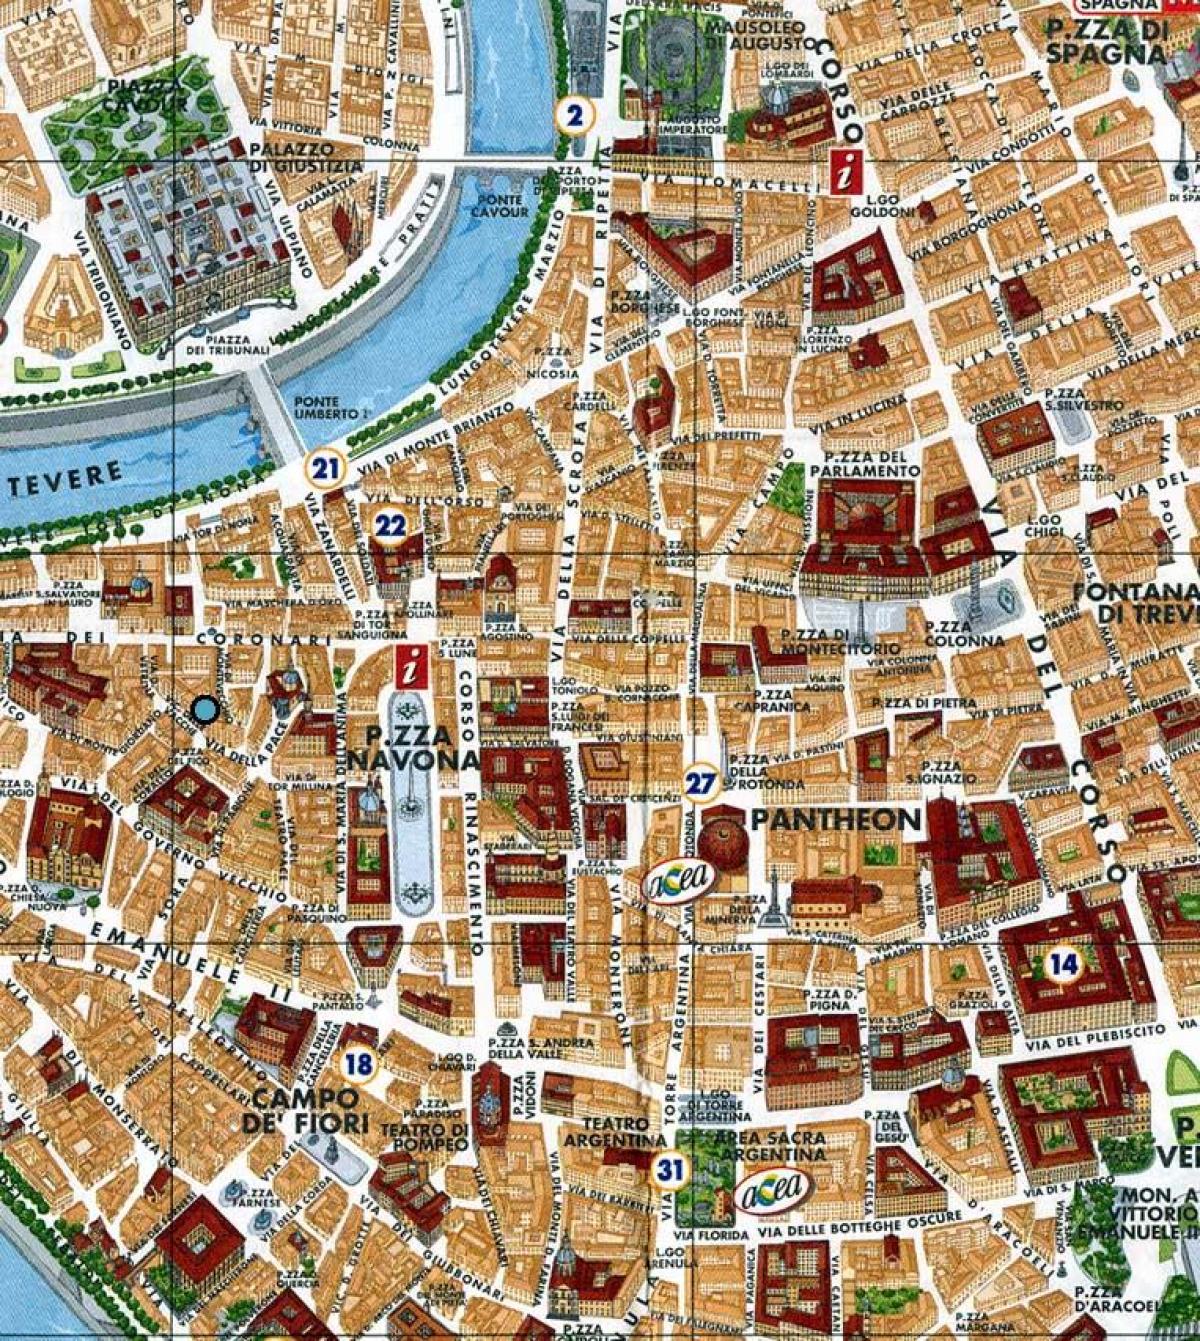 o mapa de Roma, a piazza navona